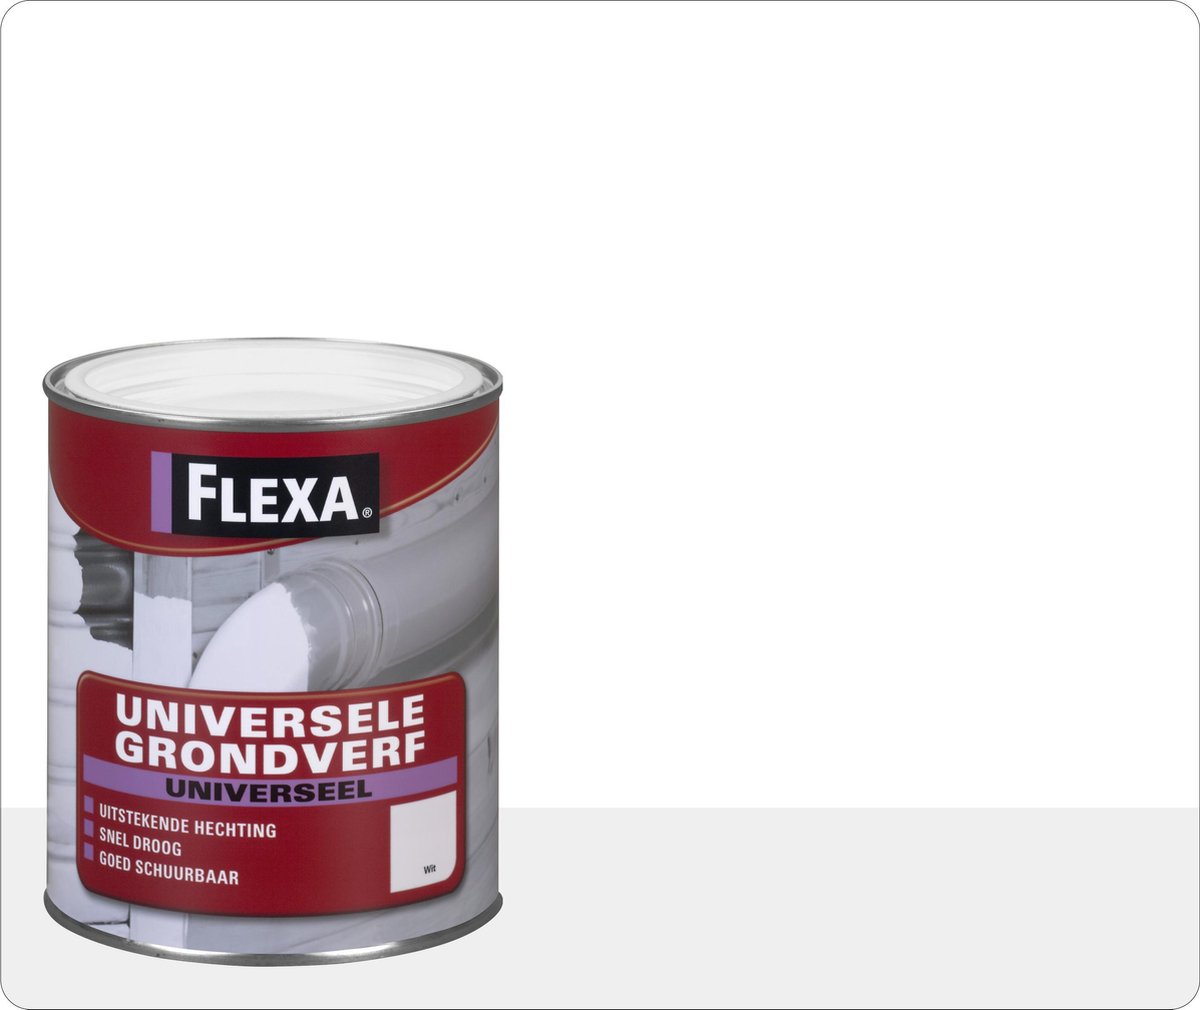 Flexa Grondverf Universeel Ltr bol.com